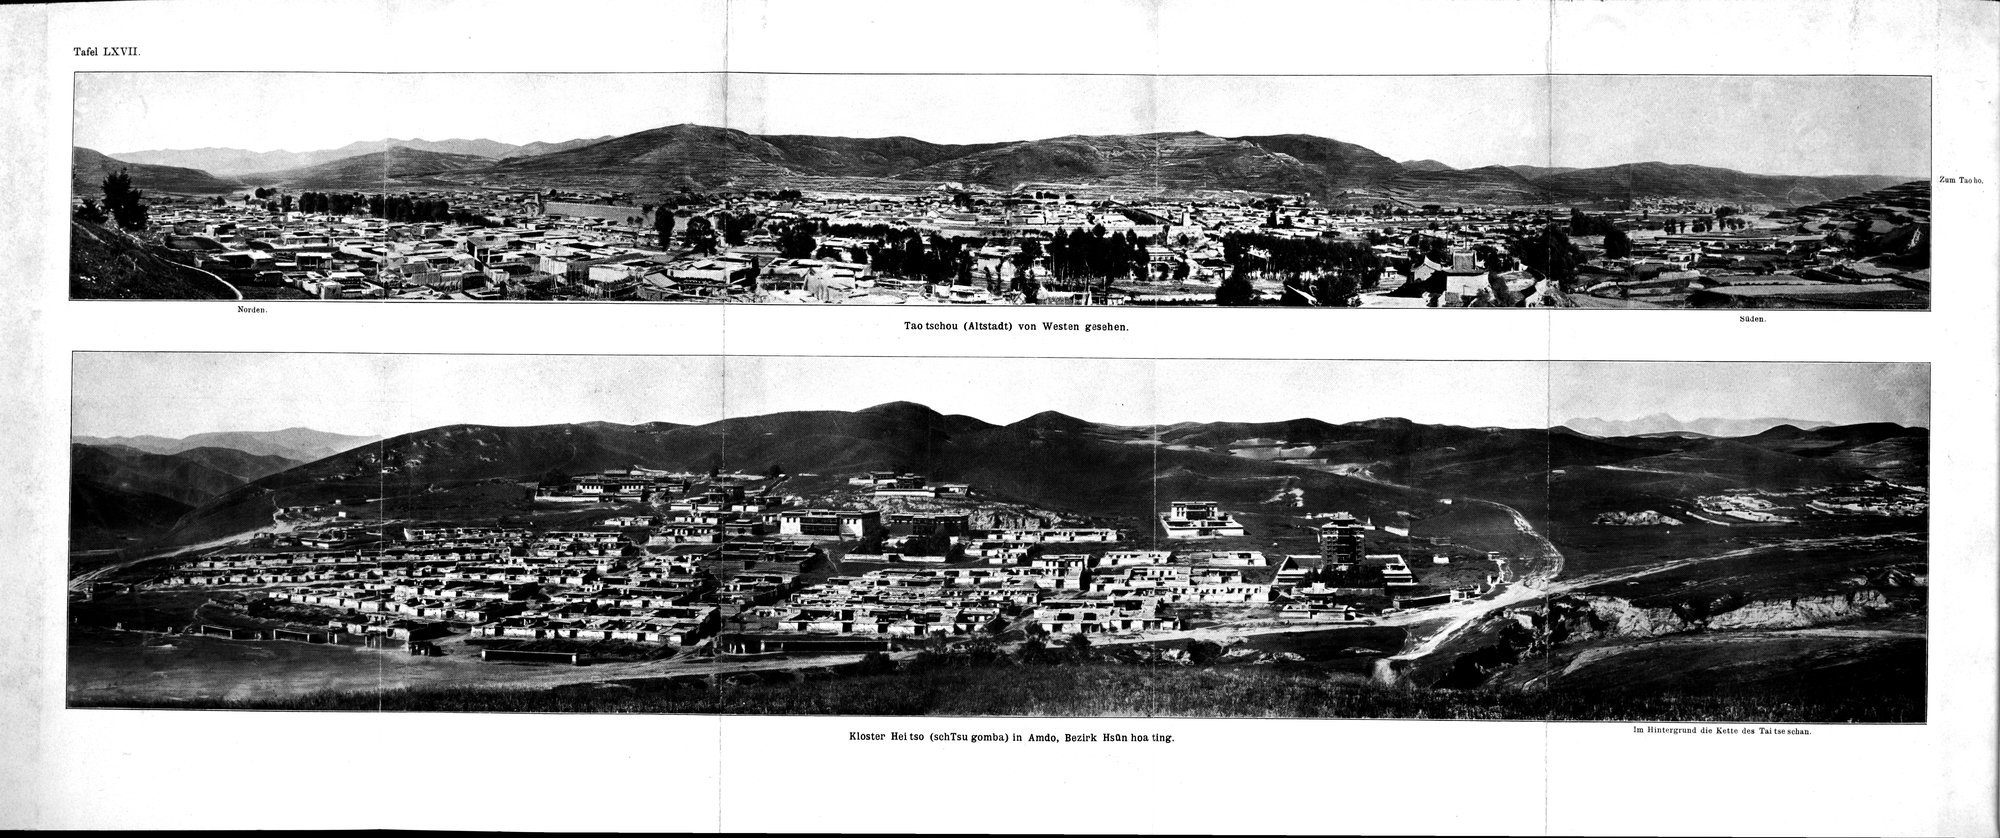 Meine Tibetreise : vol.2 / Page 366 (Grayscale High Resolution Image)